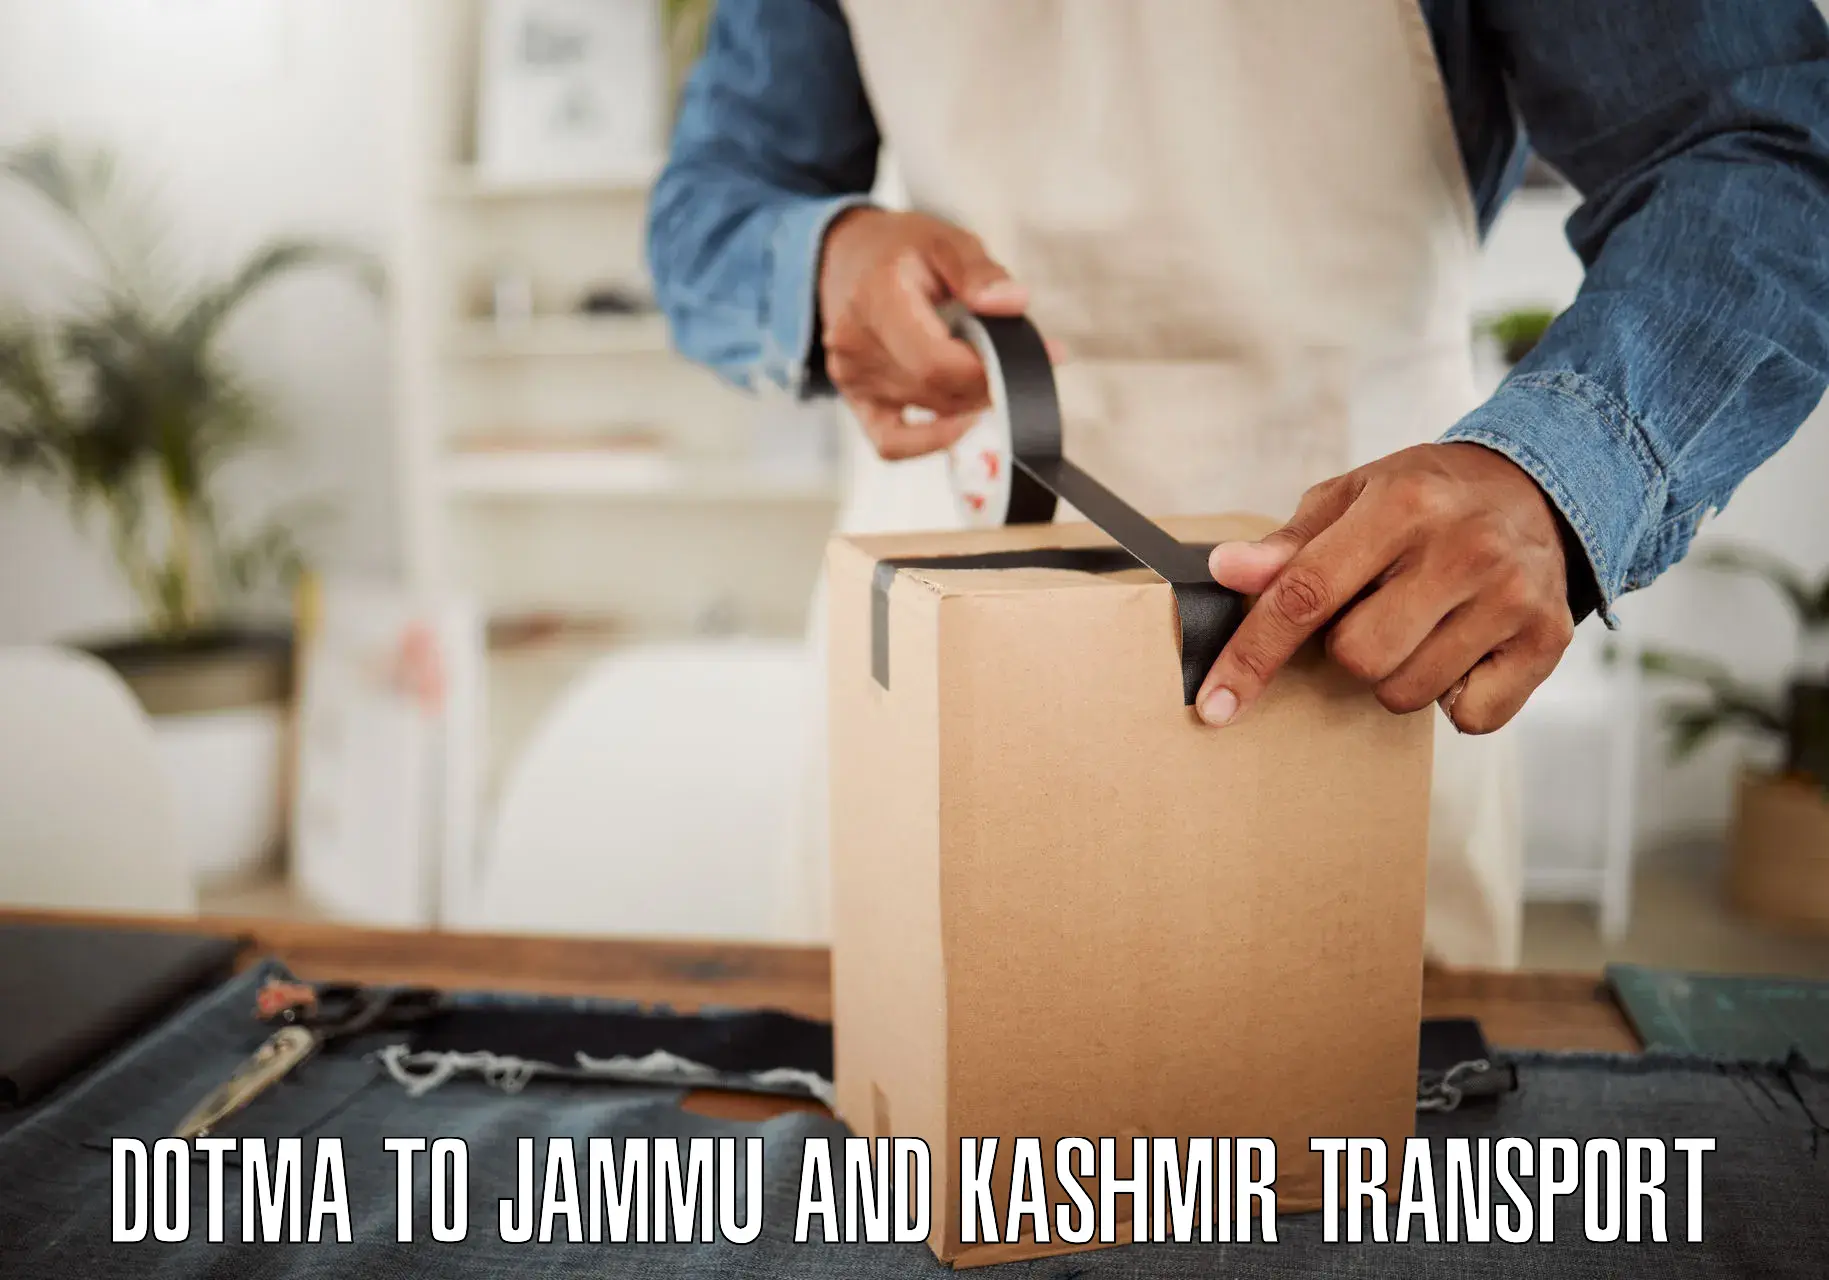 Intercity transport Dotma to Jammu and Kashmir